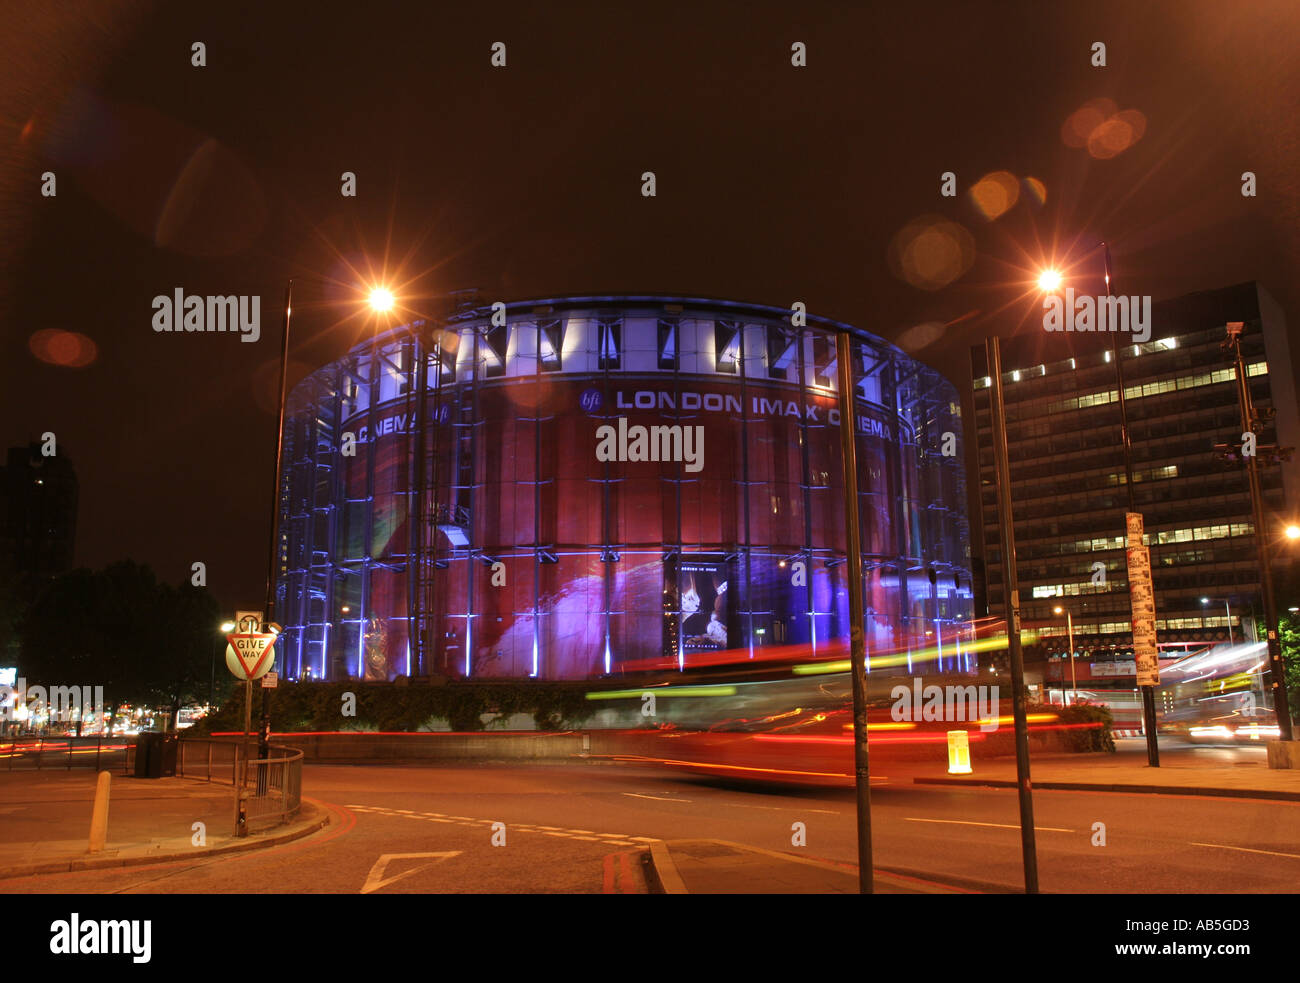 car lights rushing past the british film institute s imax cinema created using camera effect Stock Photo